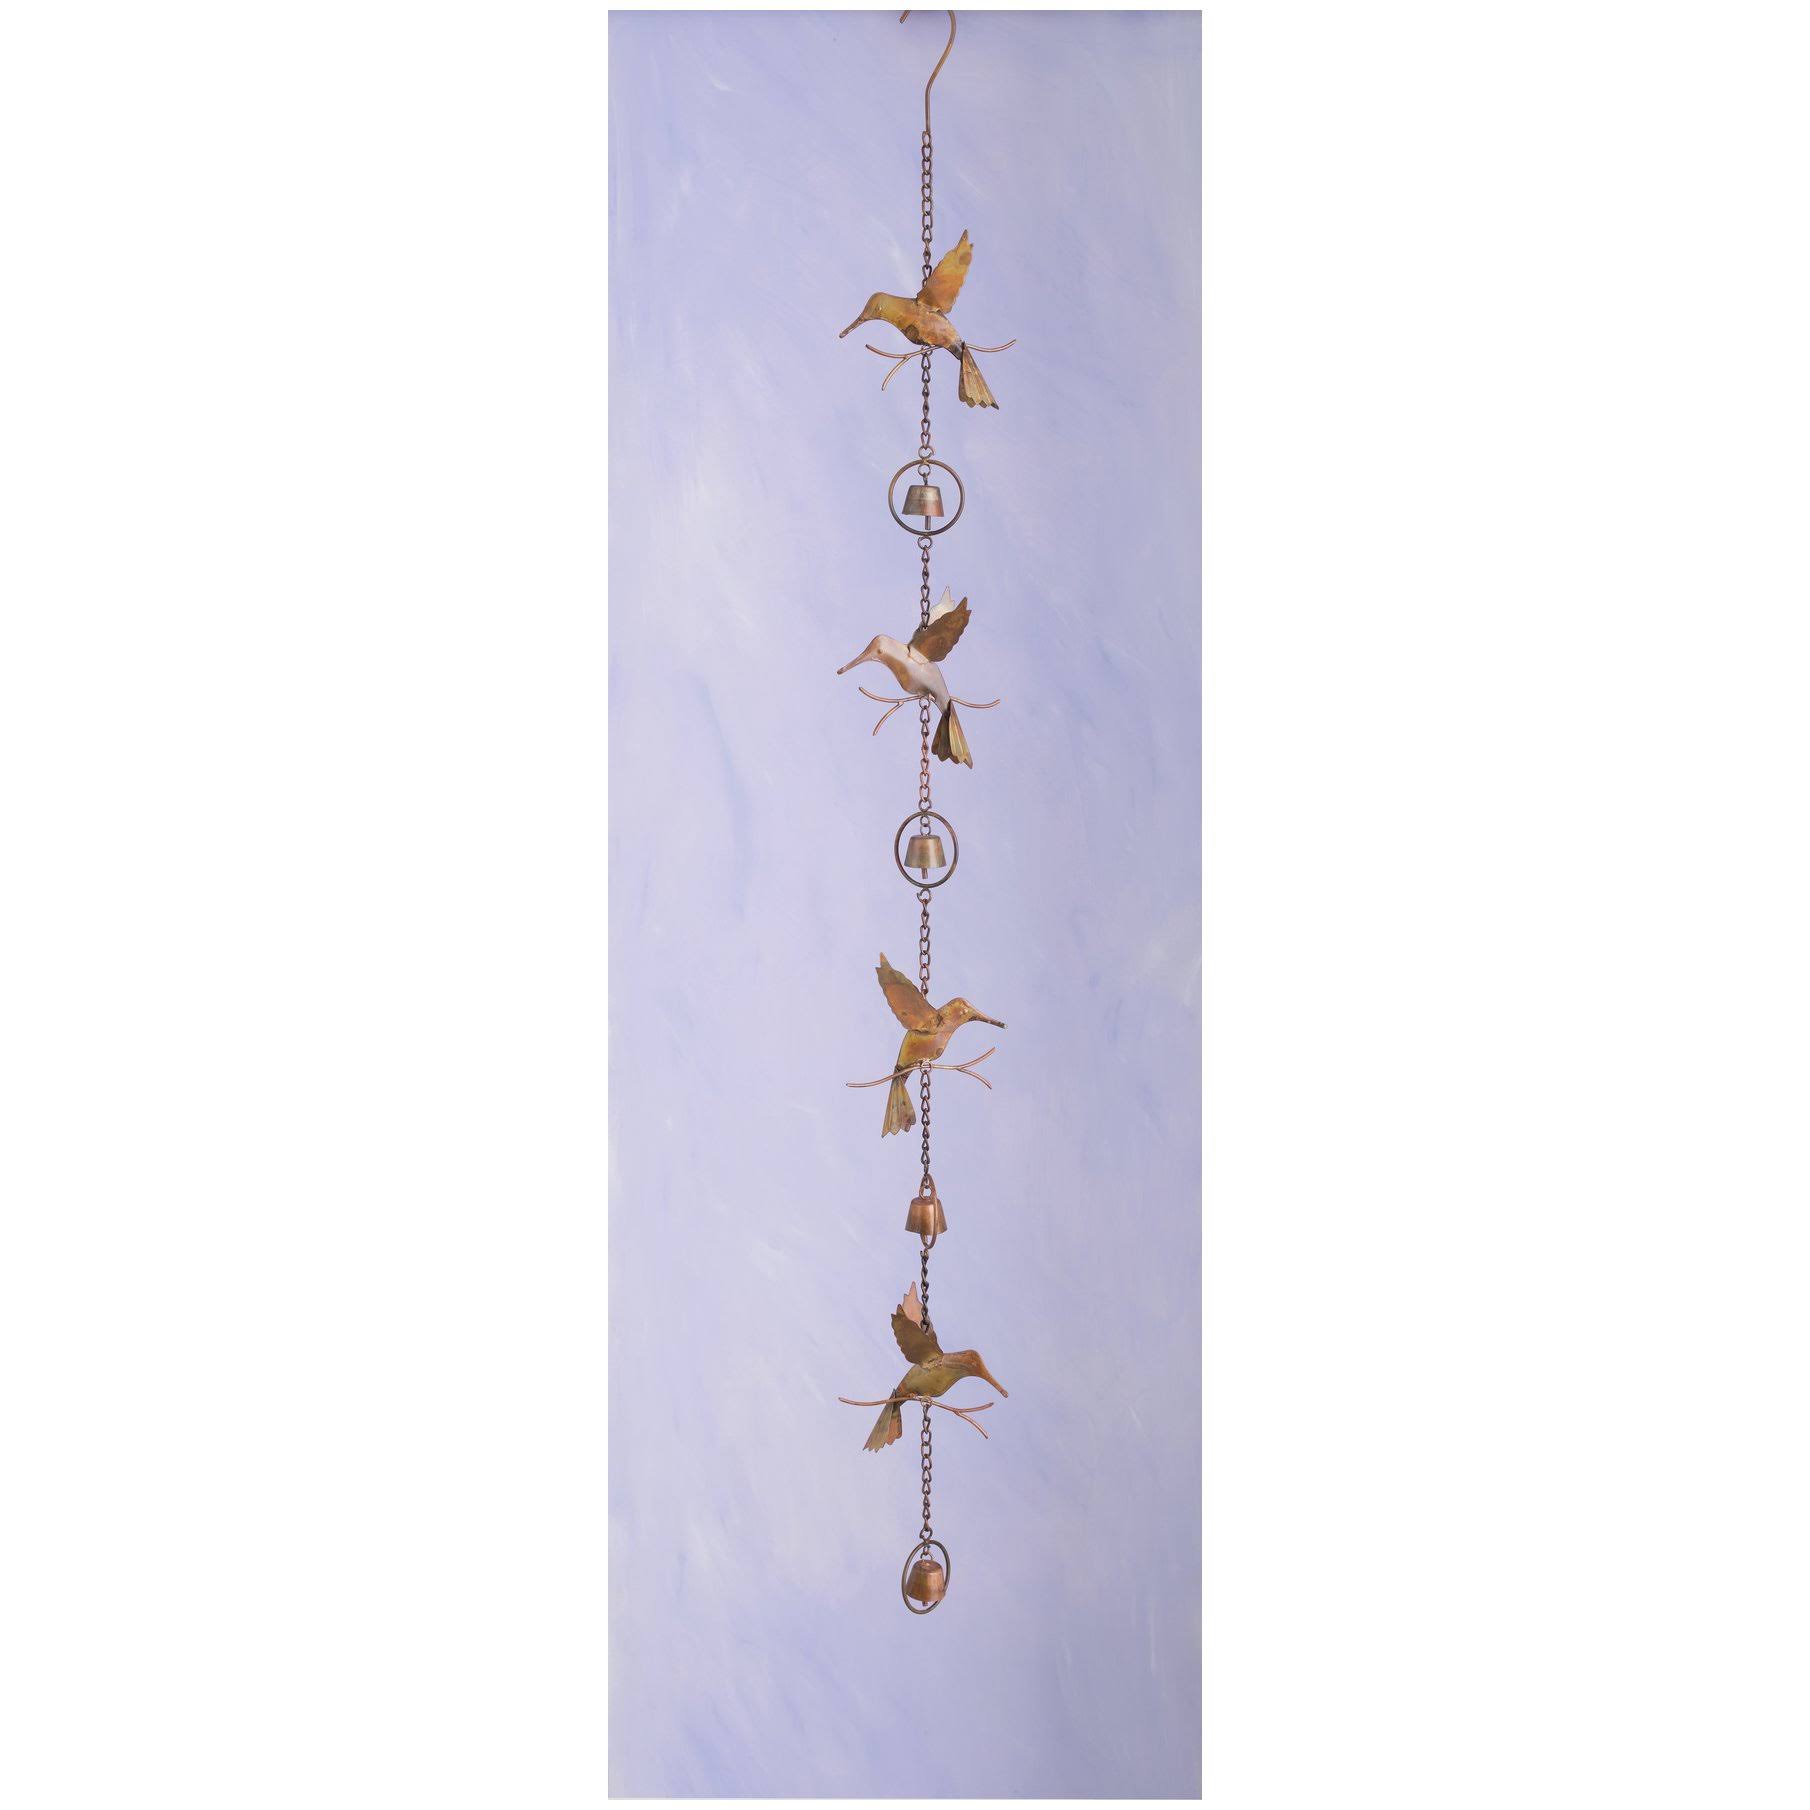 Ancient Graffiti Flamed Hummingbird & Bells Hanging Ornament